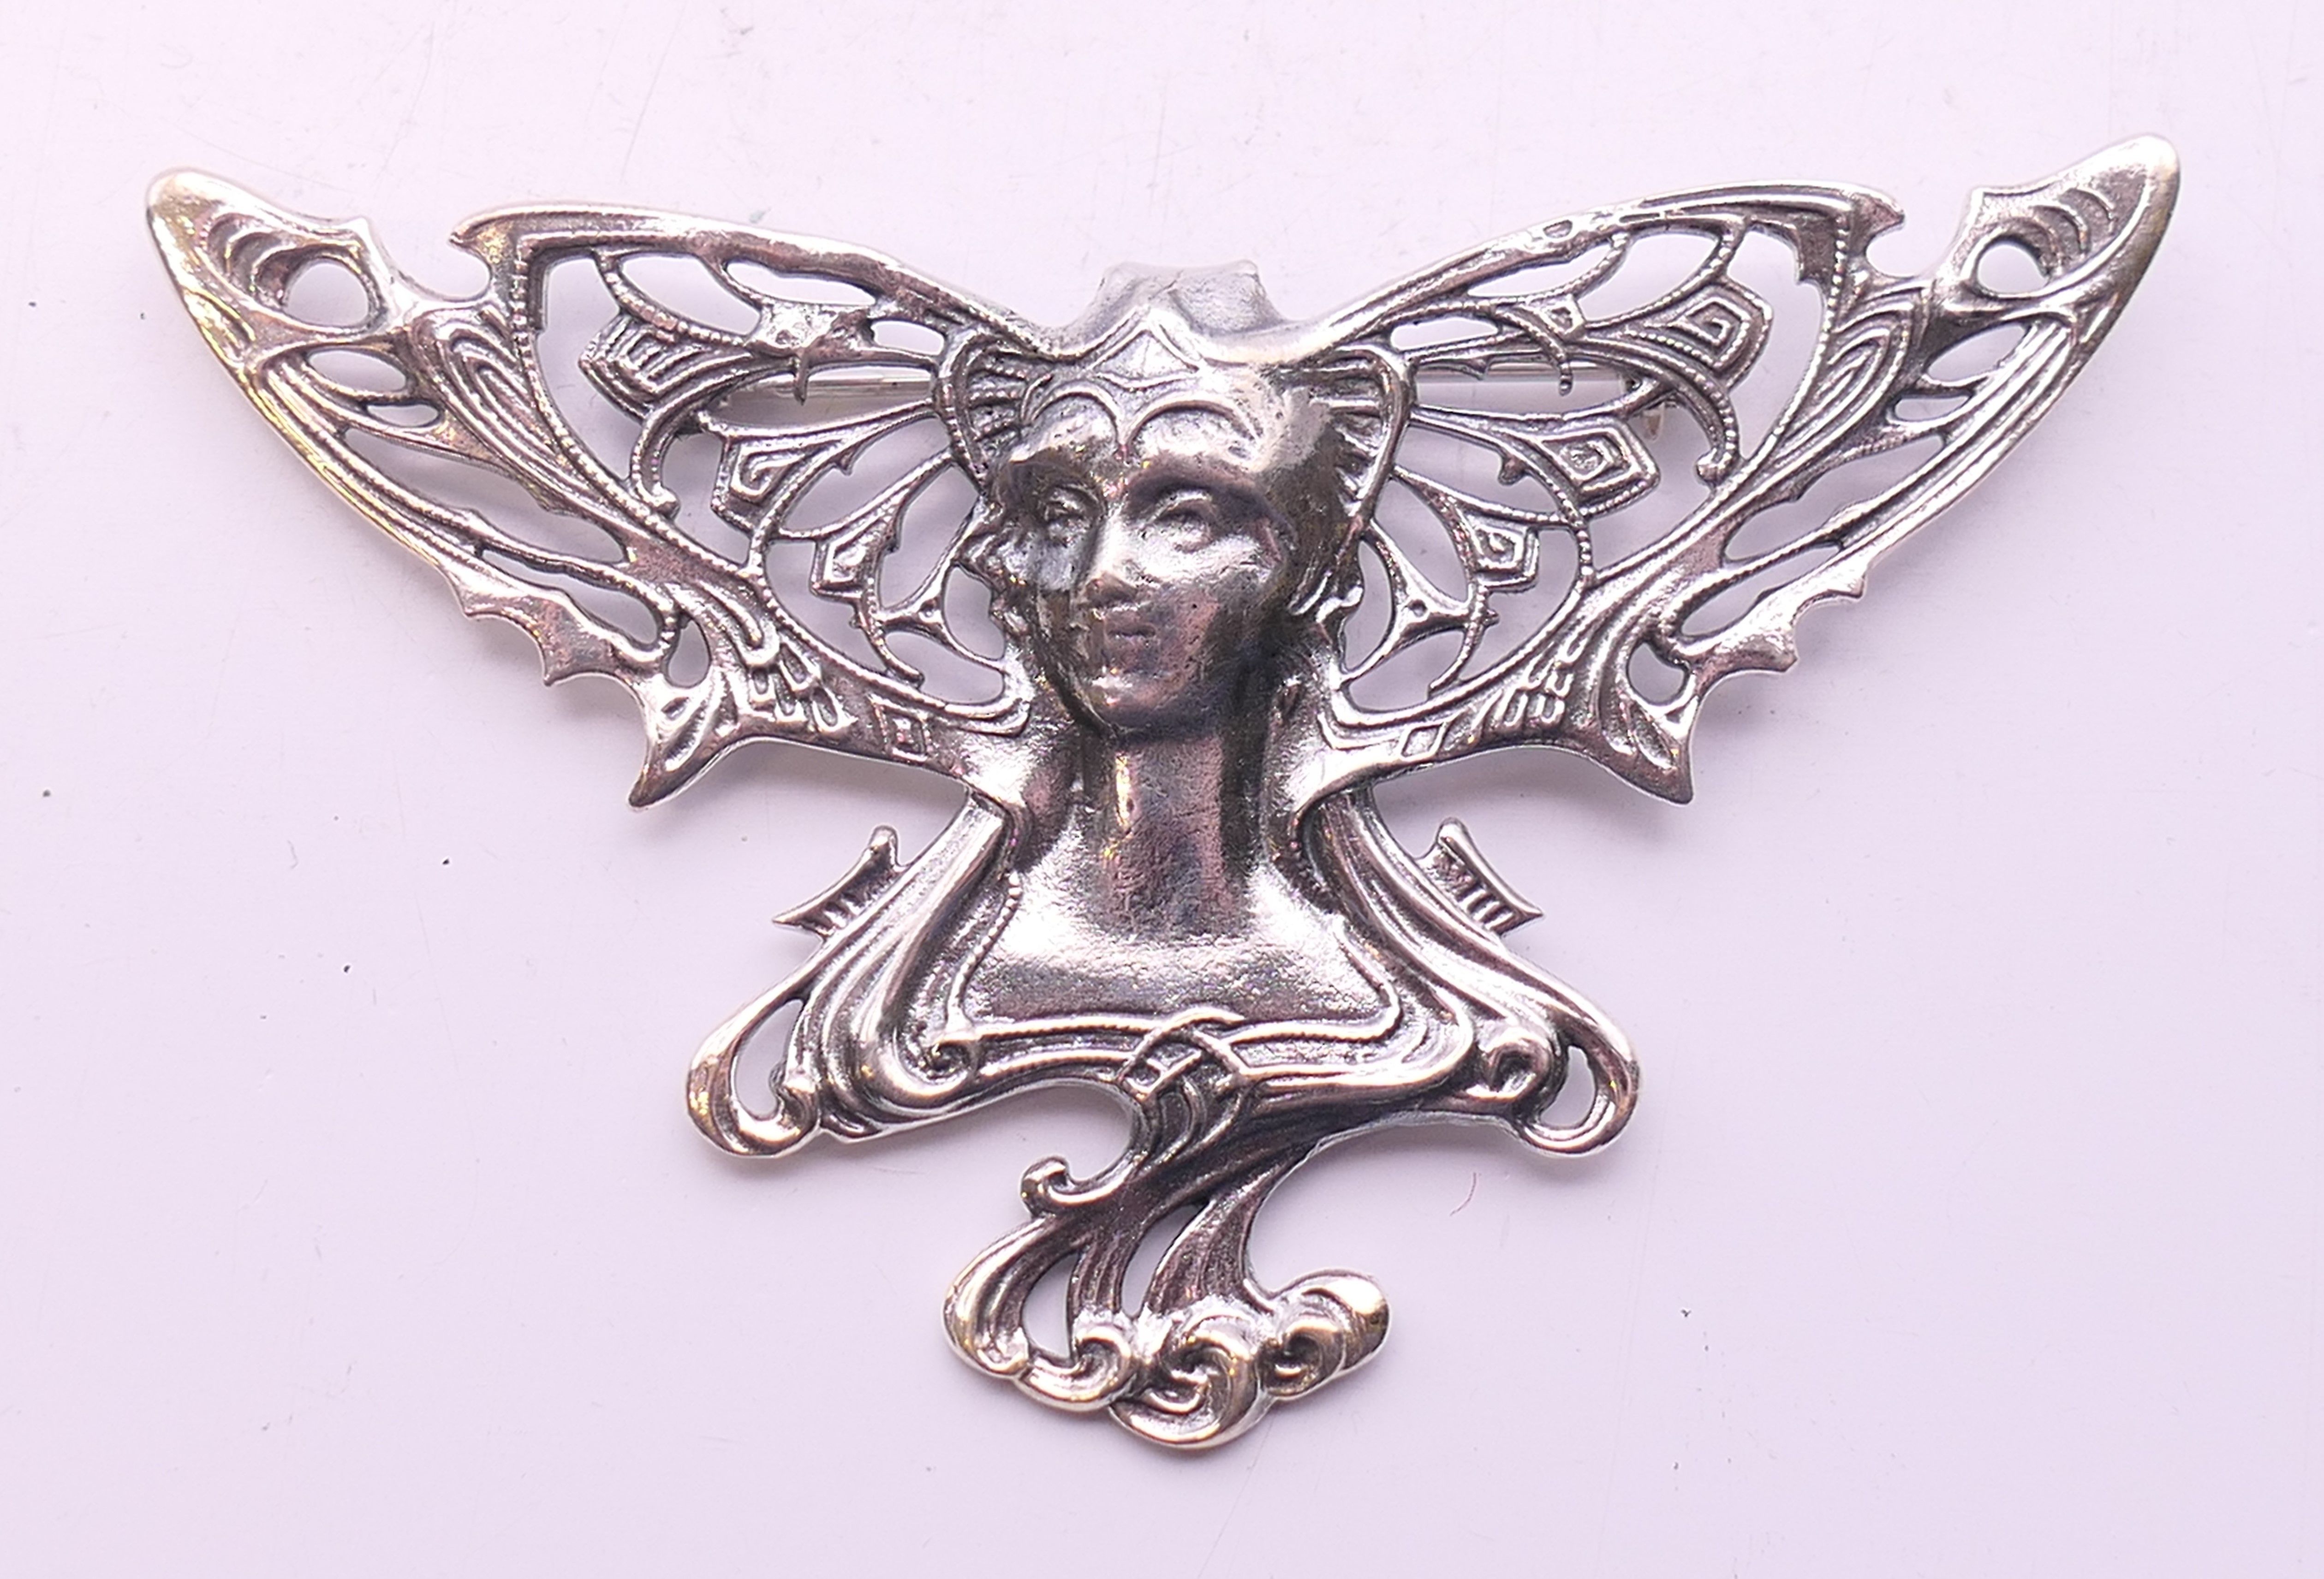 A silver Art Nouveau style girl brooch. 7.5 cm wide.